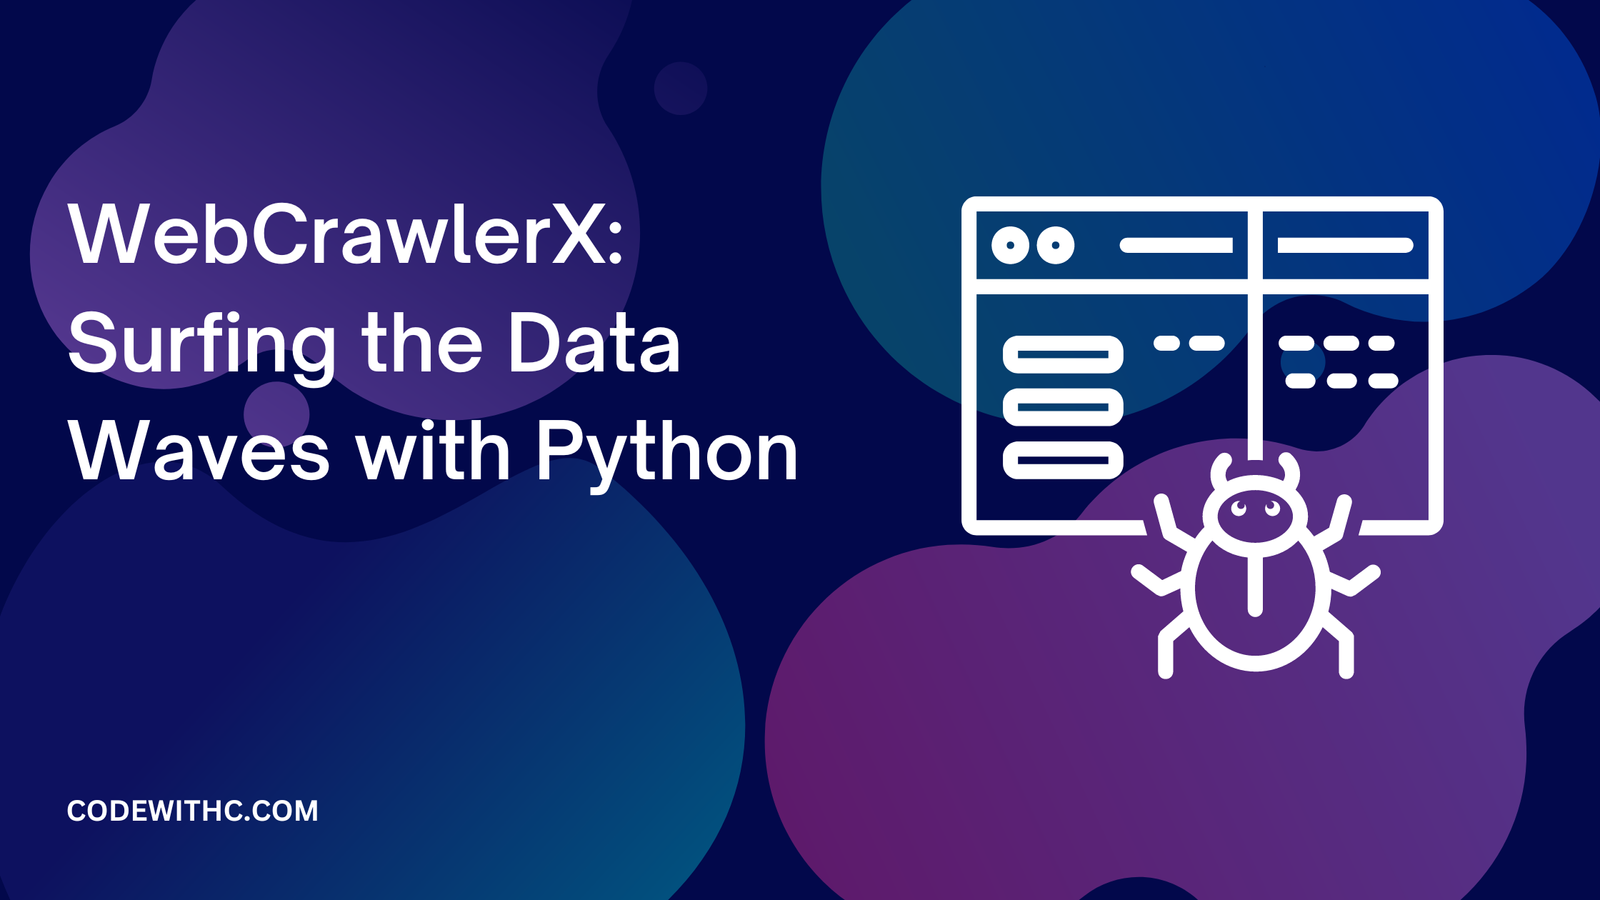 WebCrawlerX: Surfing the Data Waves with Python